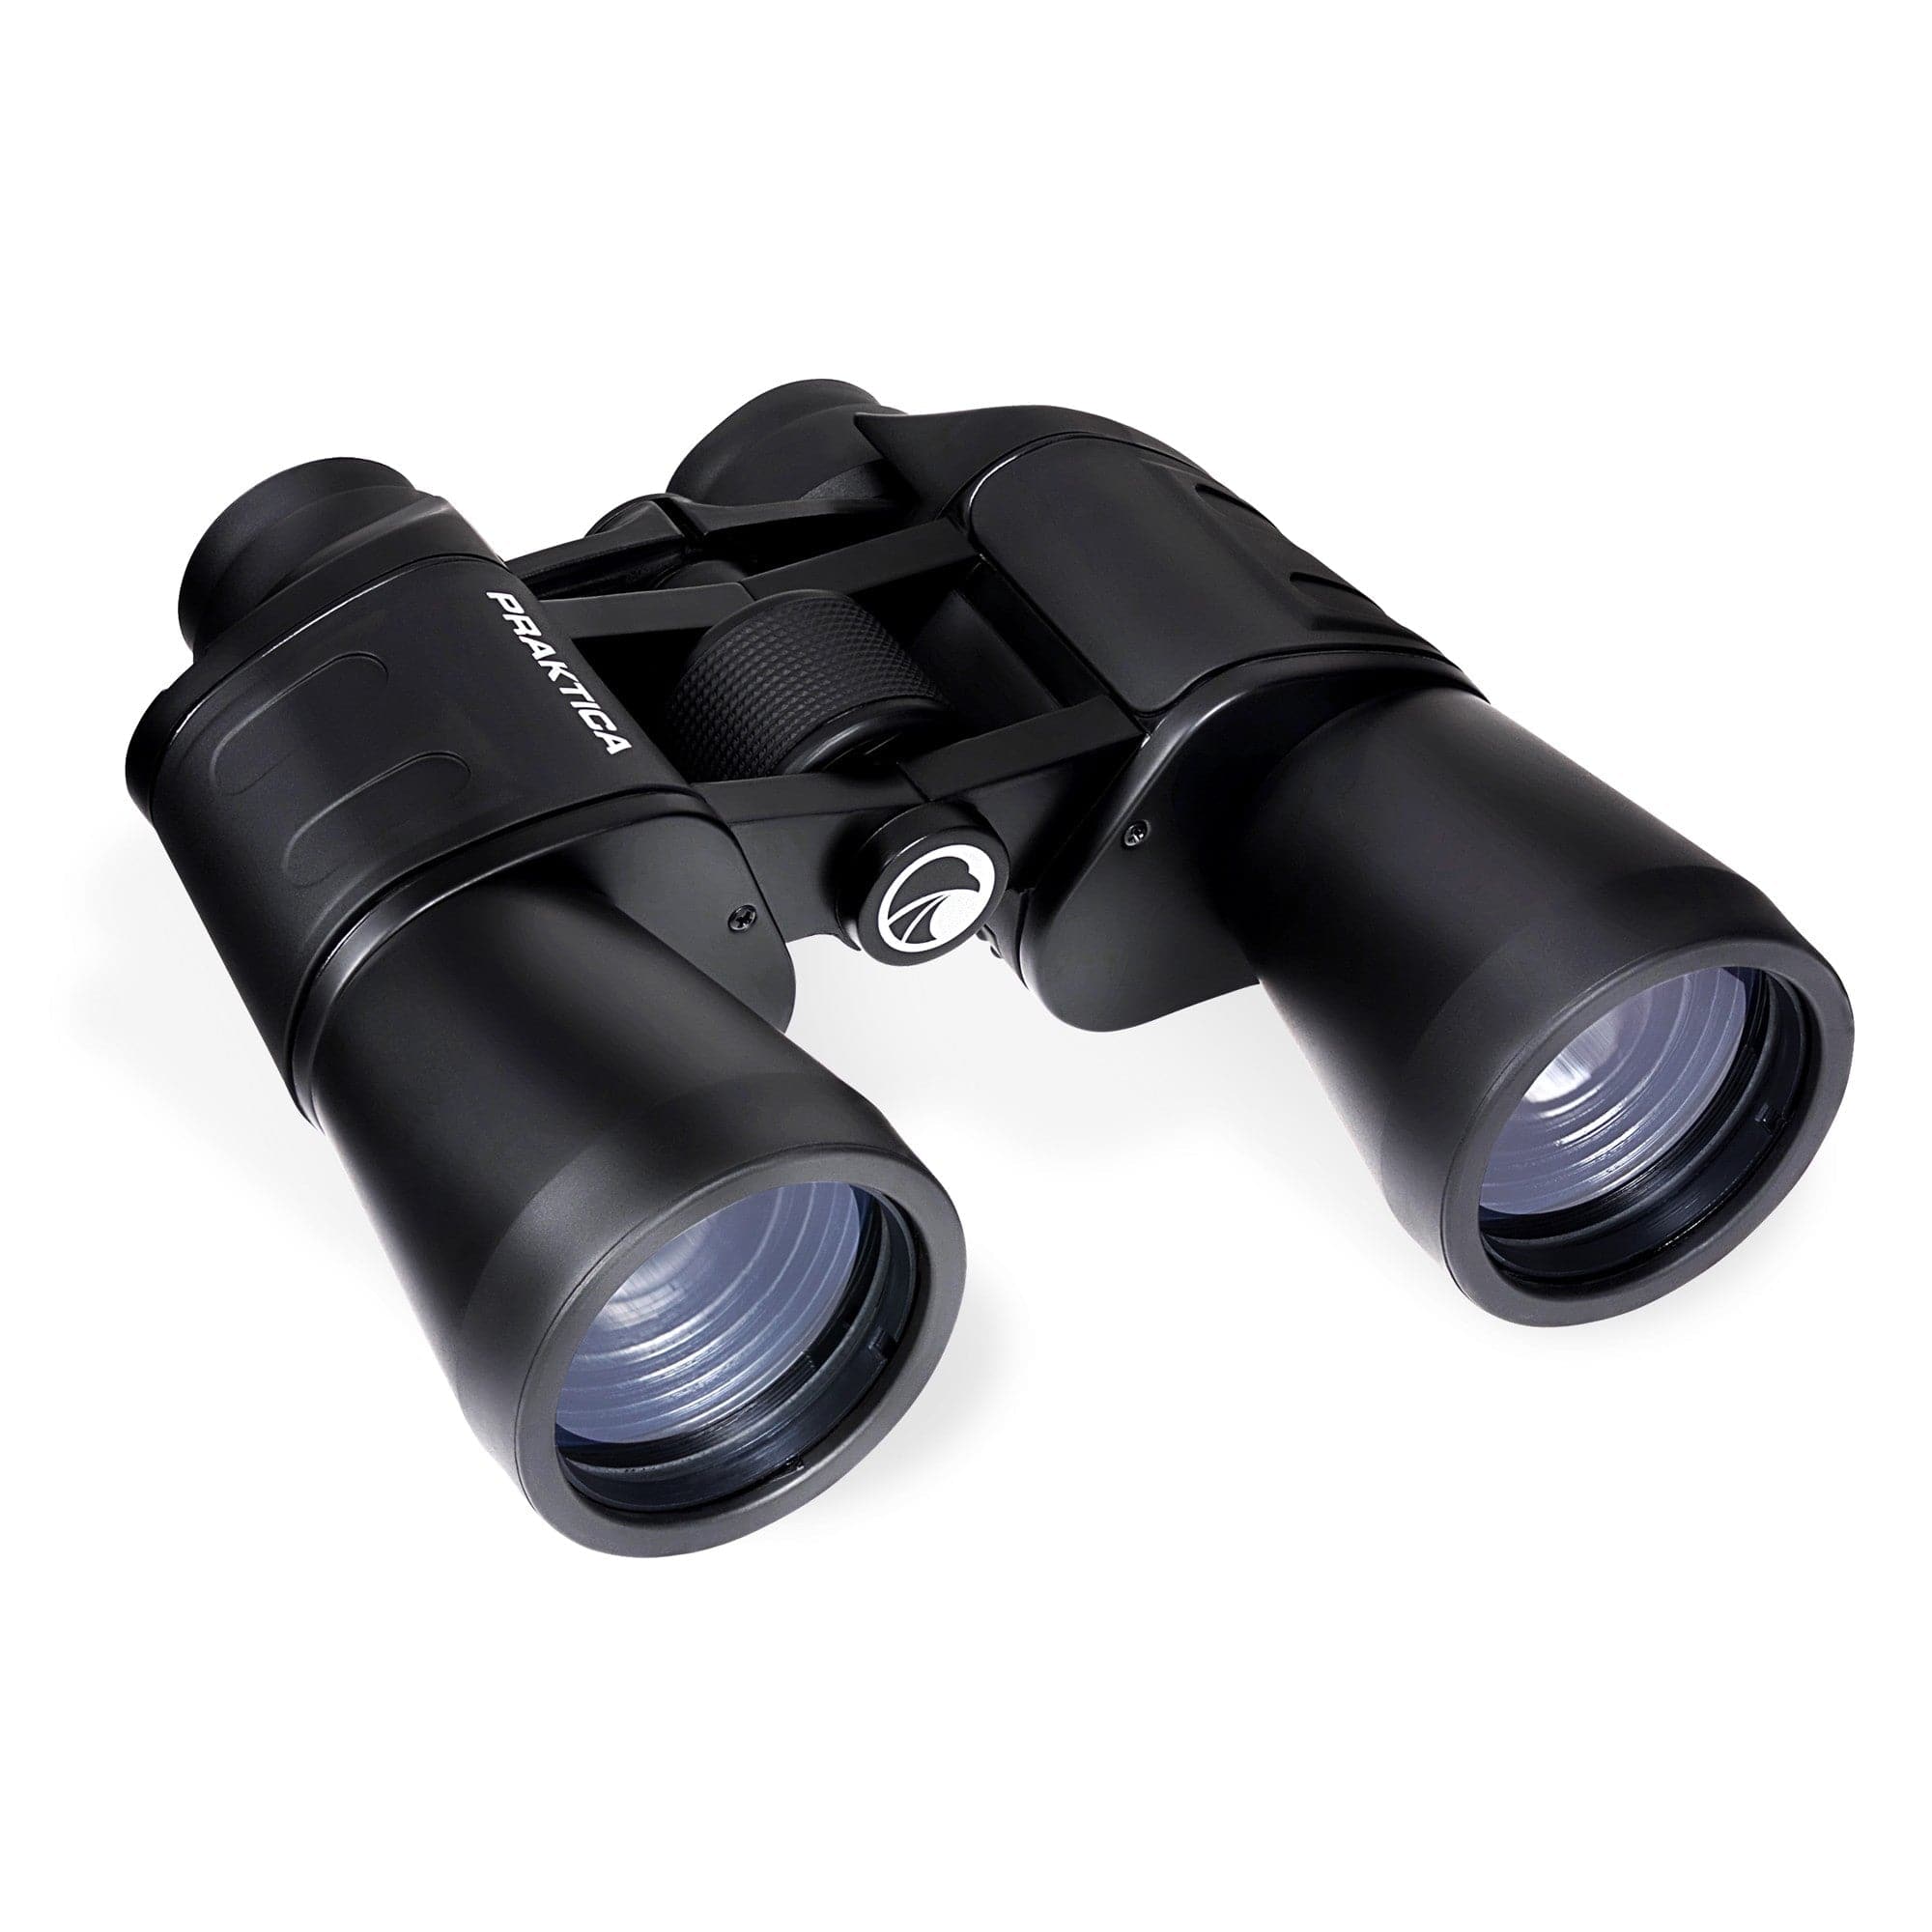 PRAKTICA Falcon 10x50mm Porro Prism Field Binoculars - Black (Binoculars Only)